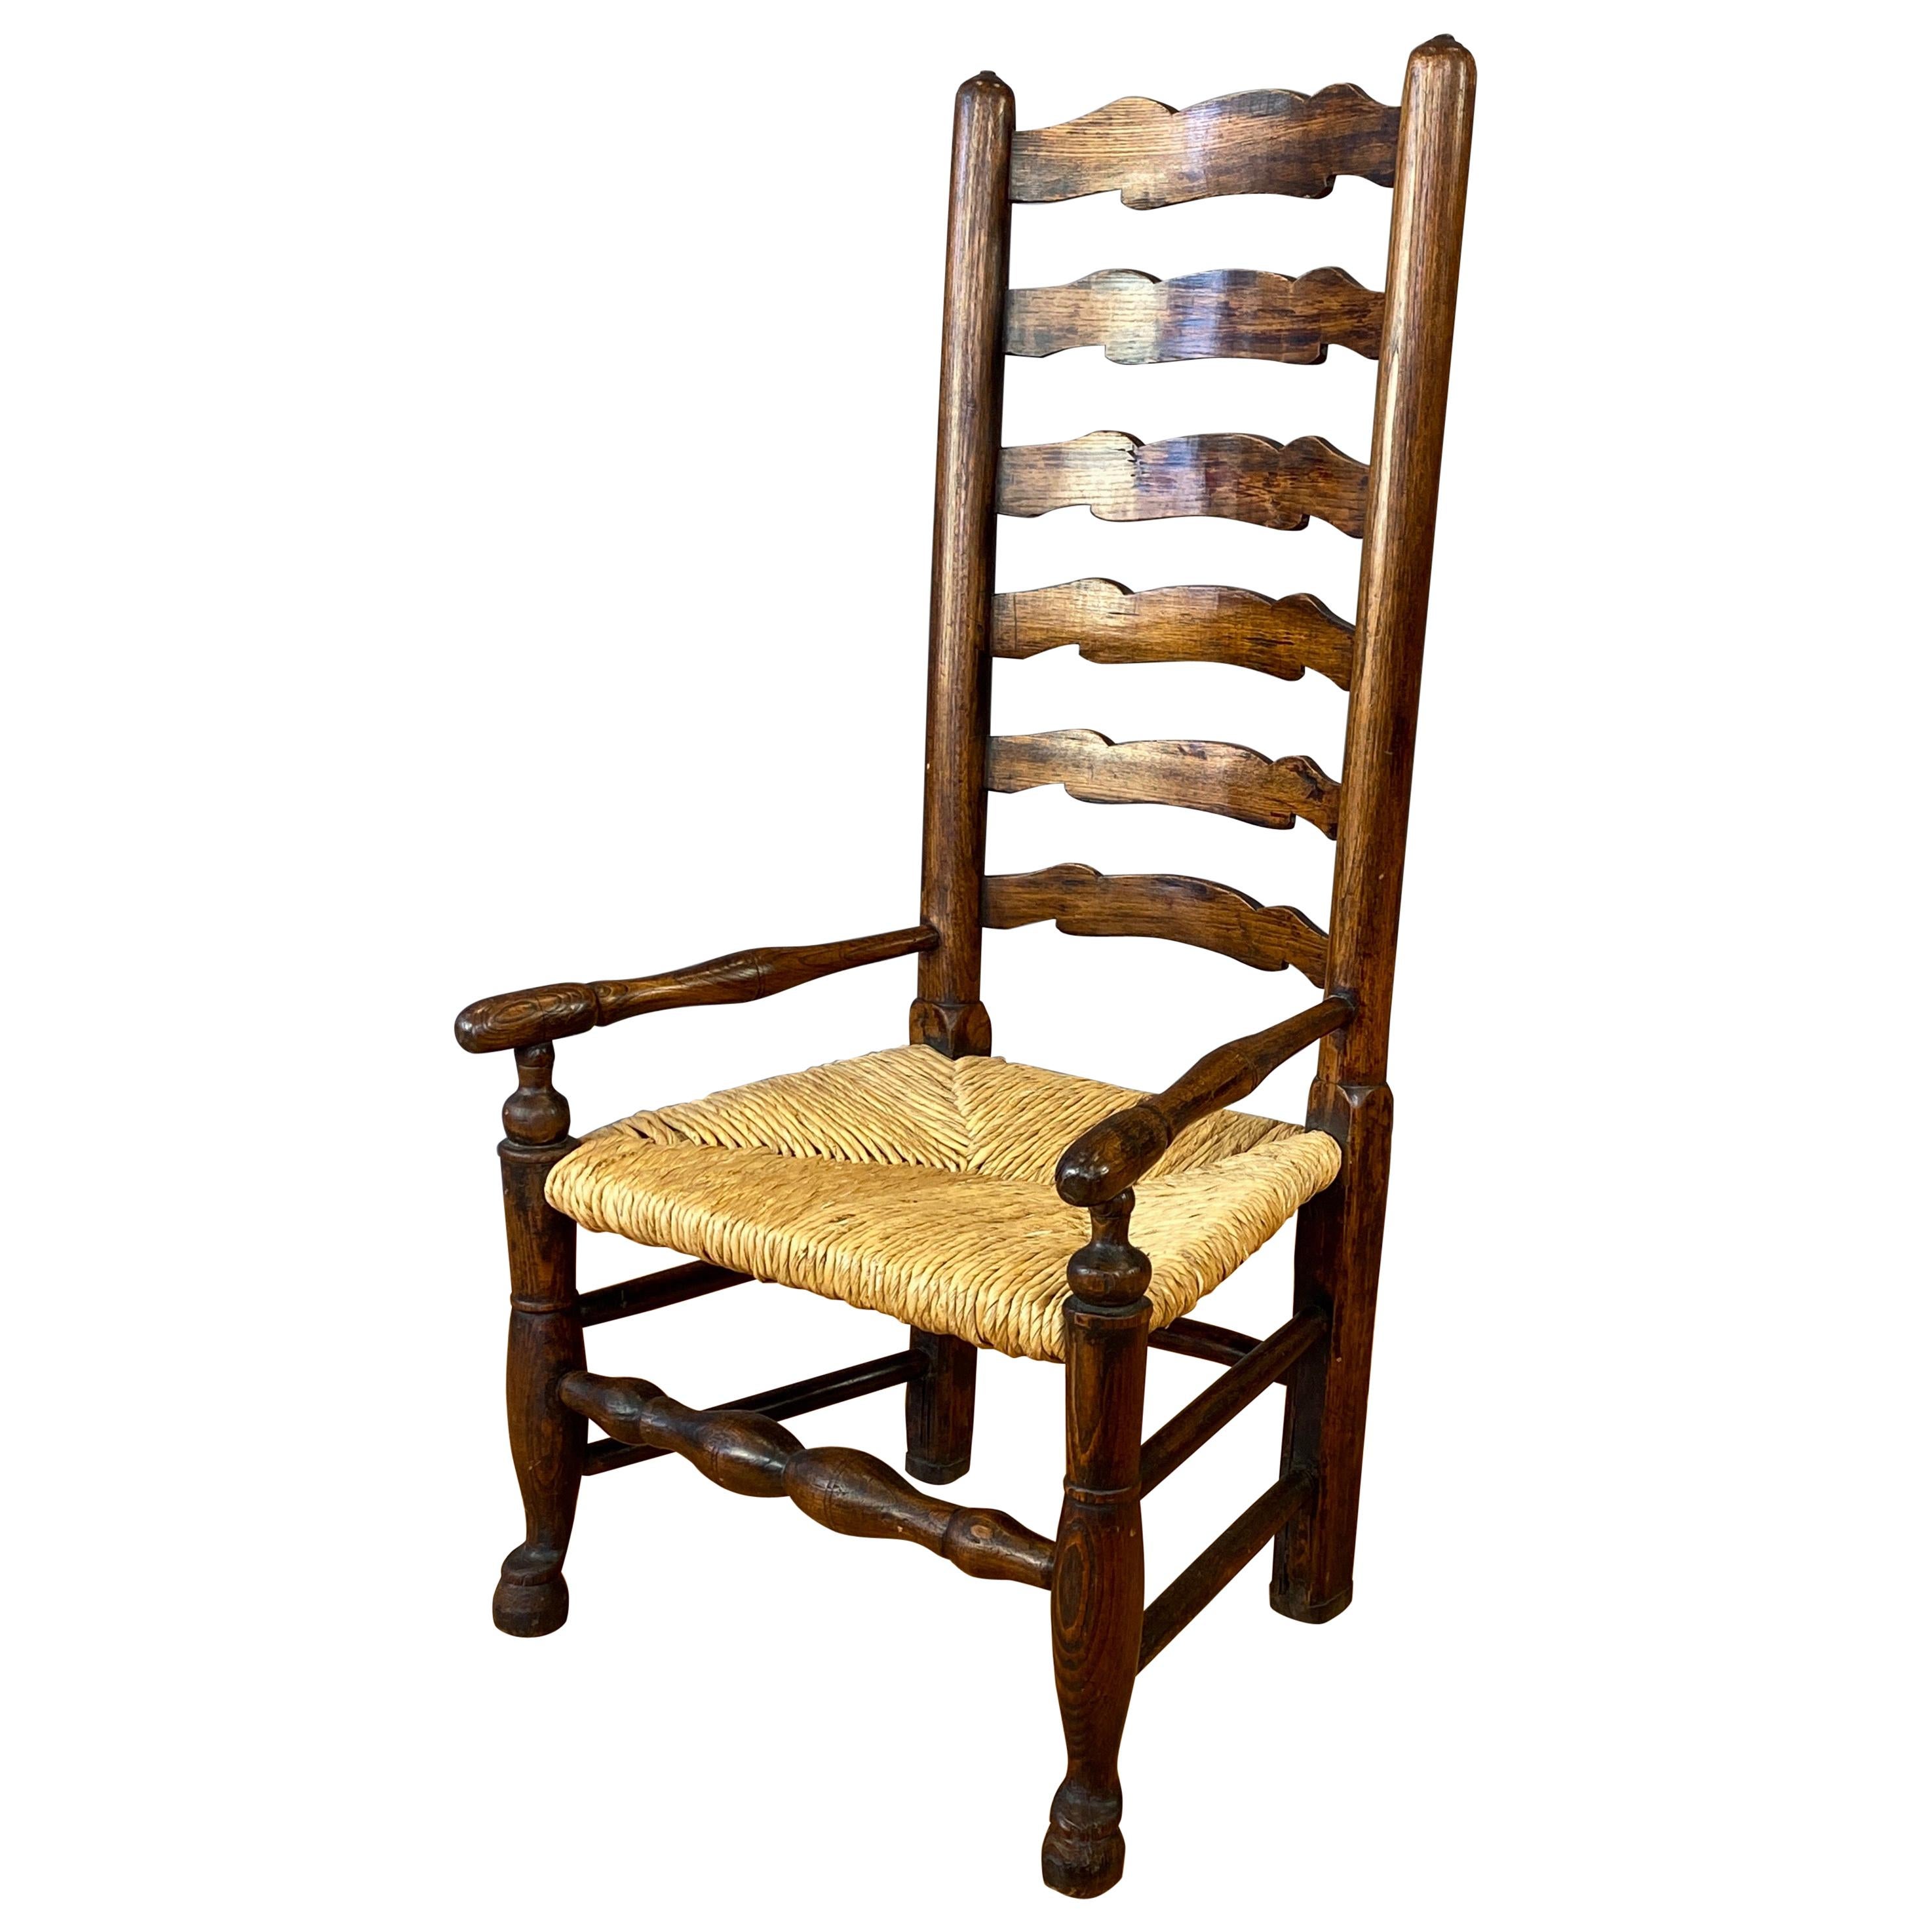 English Georgian Period Elm Ladderback Fireside Armchair with Rush Seat, c. 1800